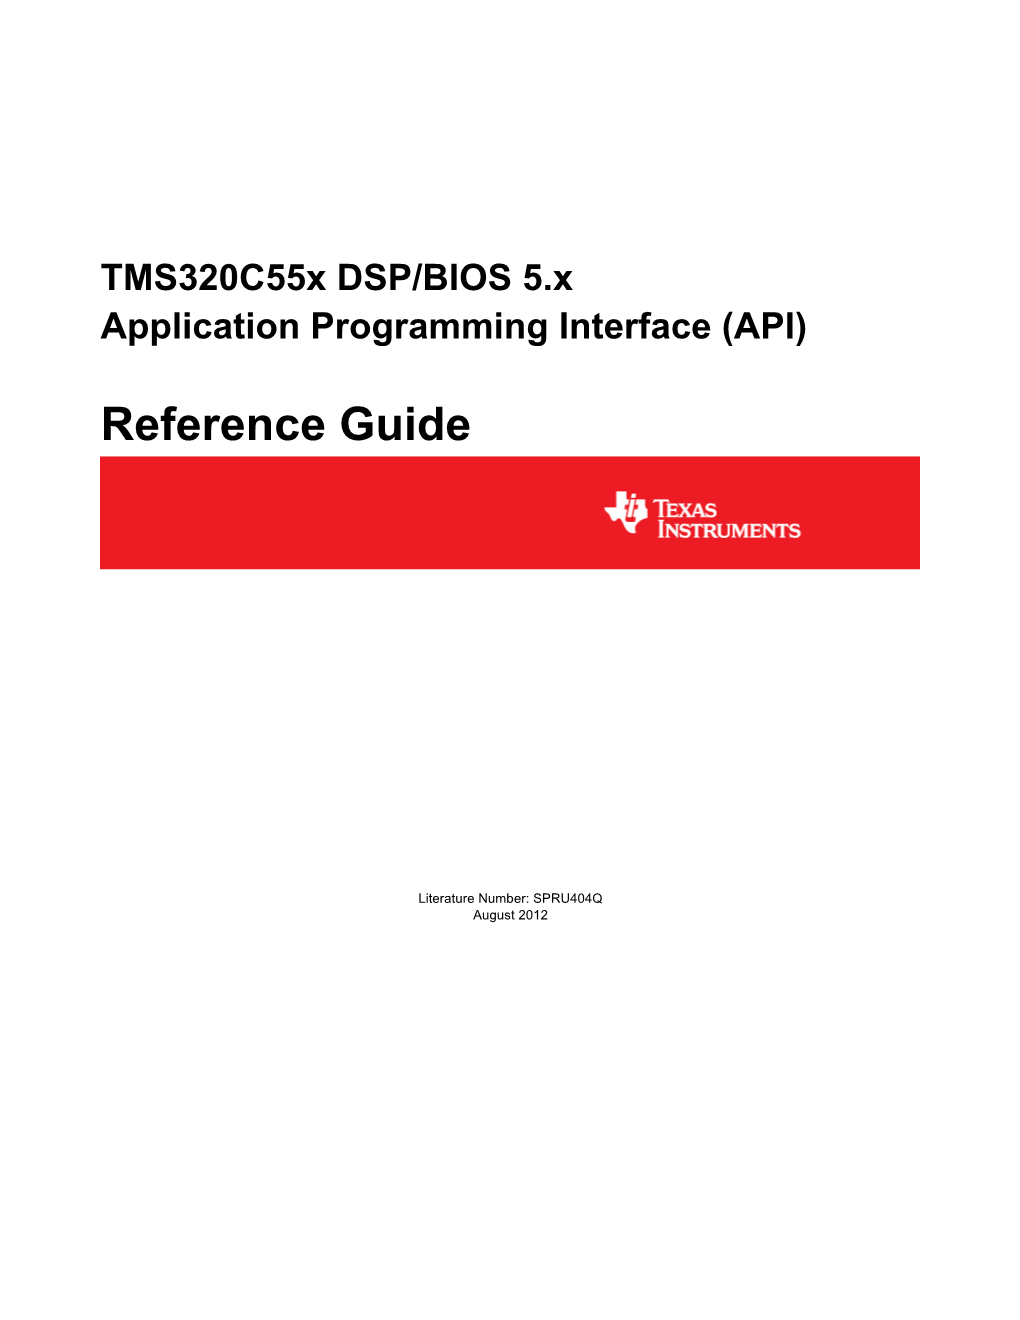 Tms320c55x DSP/BIOS 5.X Application Programming Interface (API)